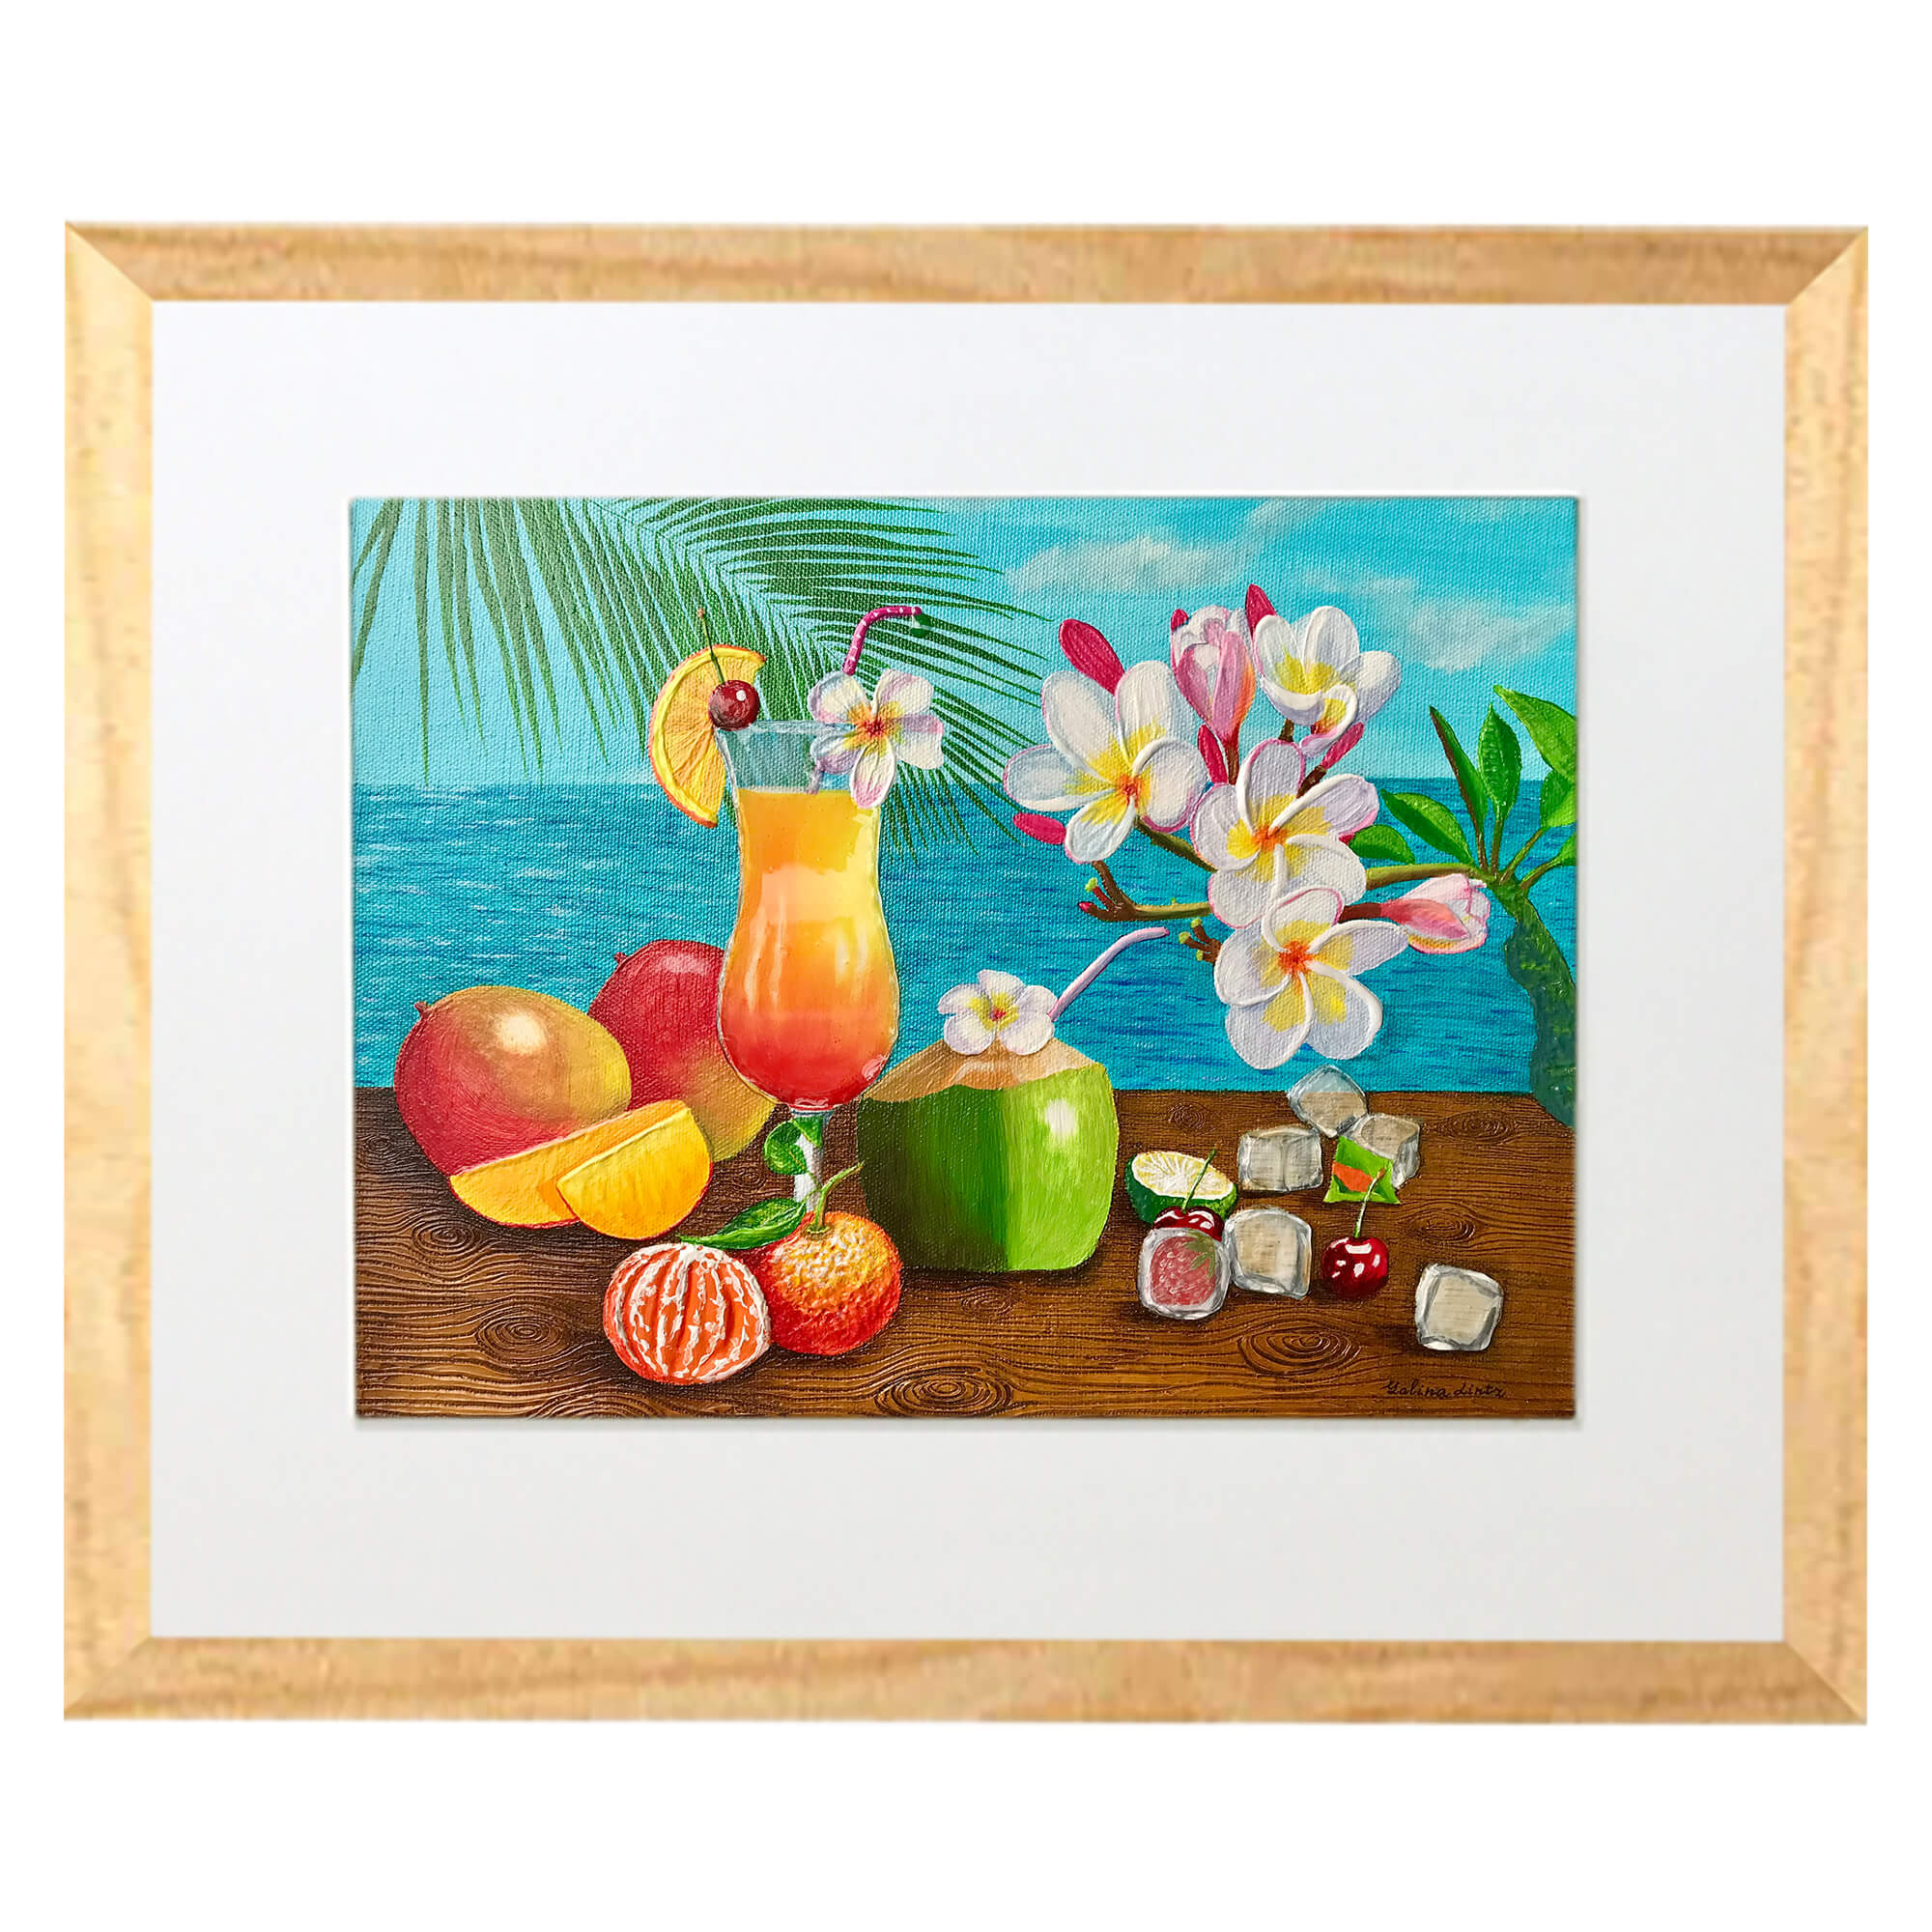 Matted art print with wood frame showcasing an orange by hawaii artist Galina Lintz